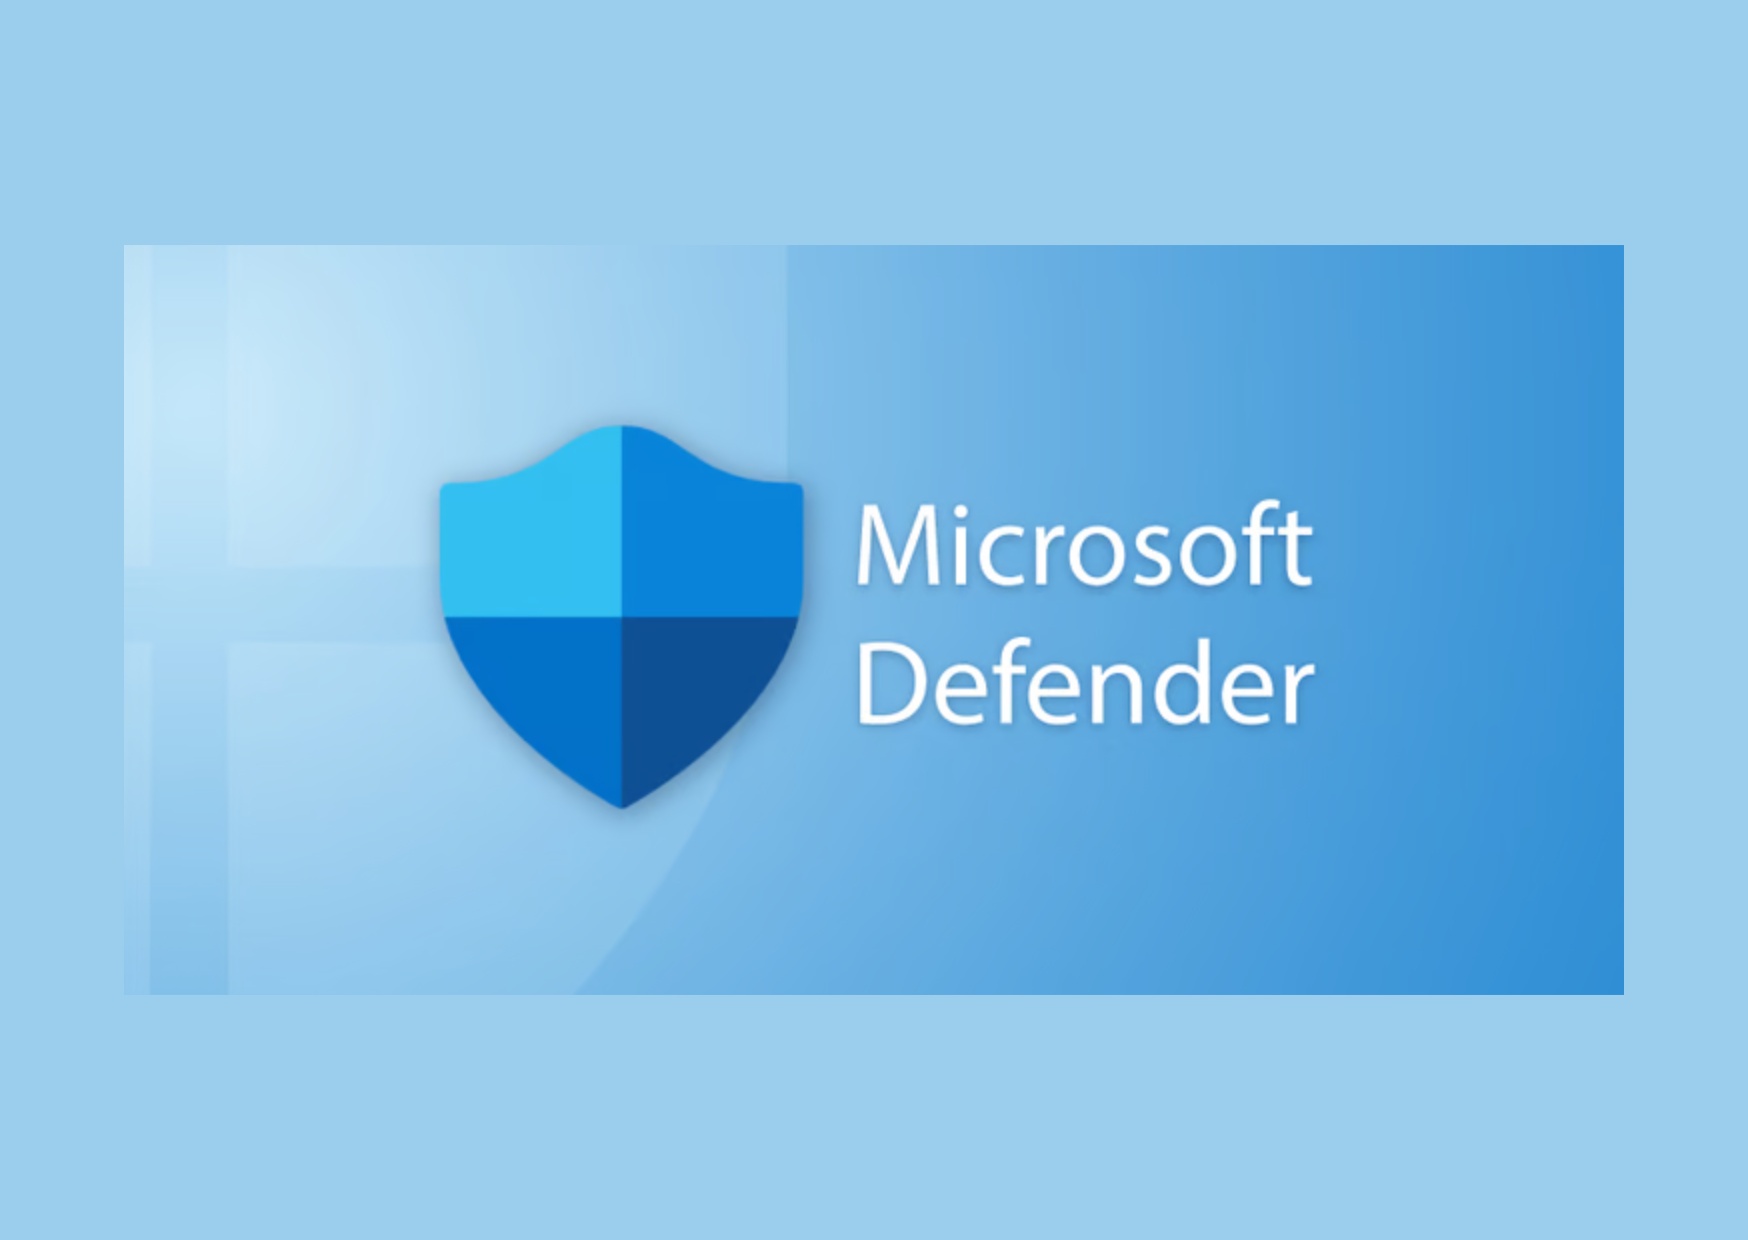 MOC MS-102 Microsoft Defender